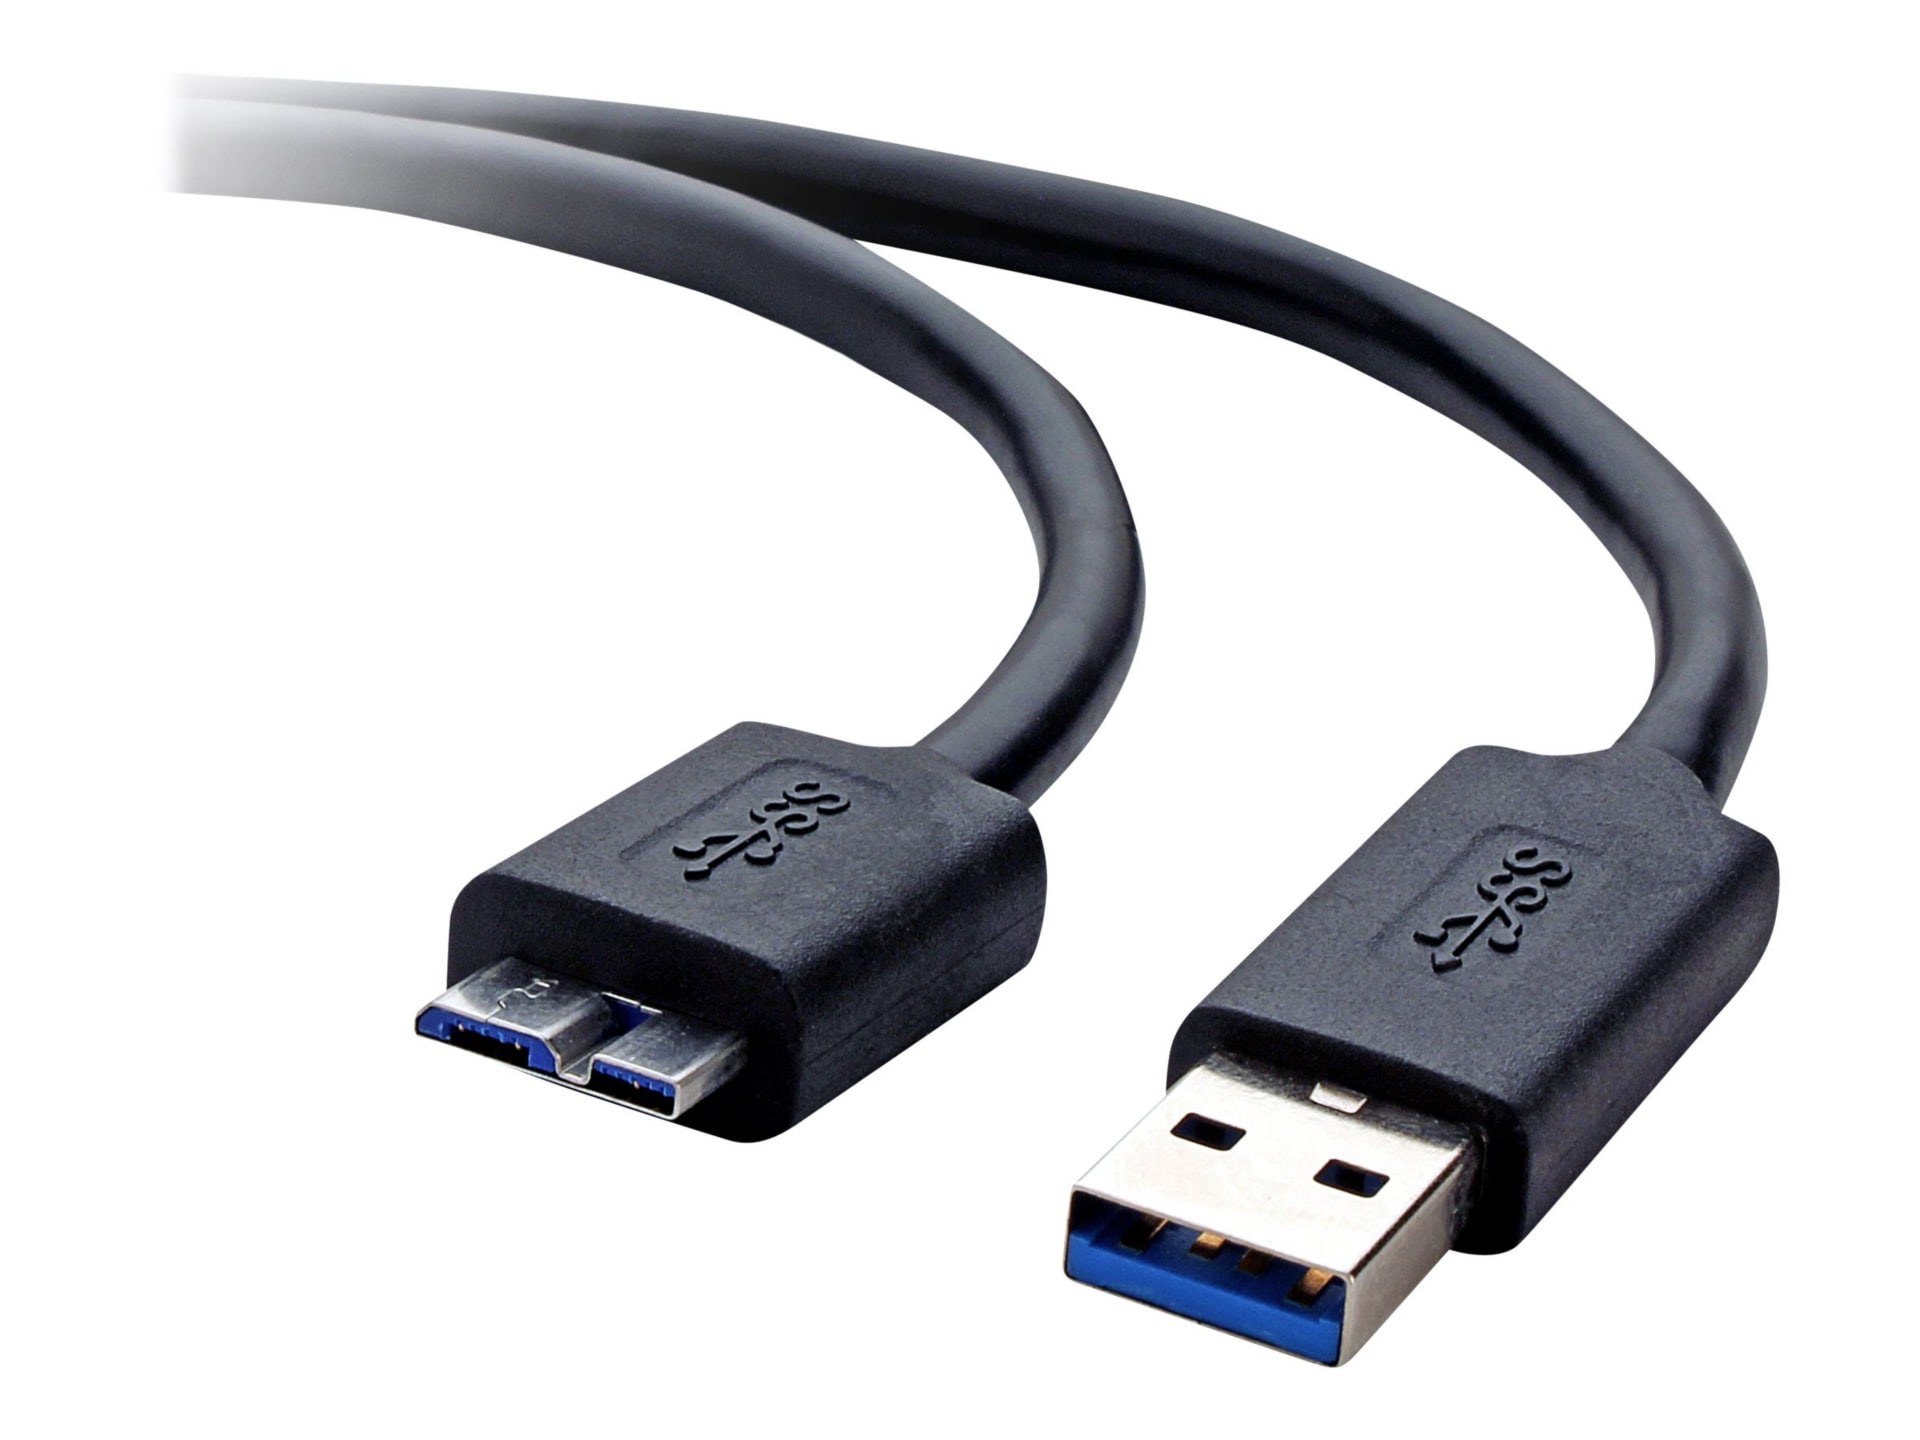 micro usb data transfer cable